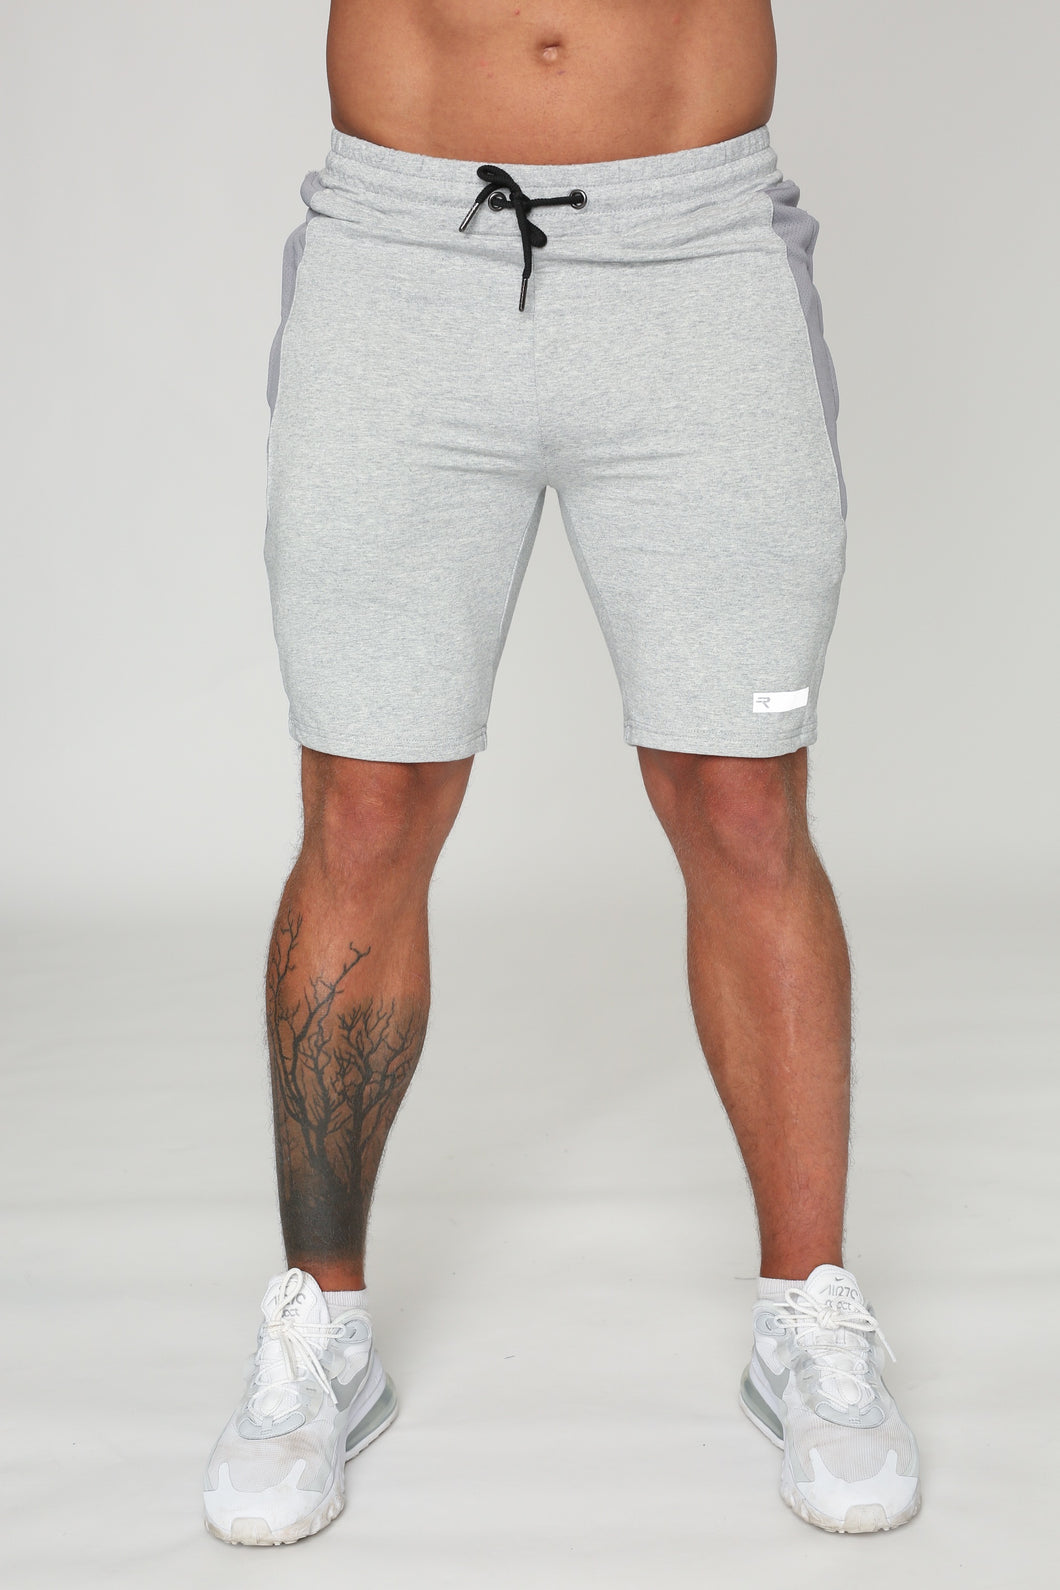 Repwear Fitness ProFit Shorts Stone Grey